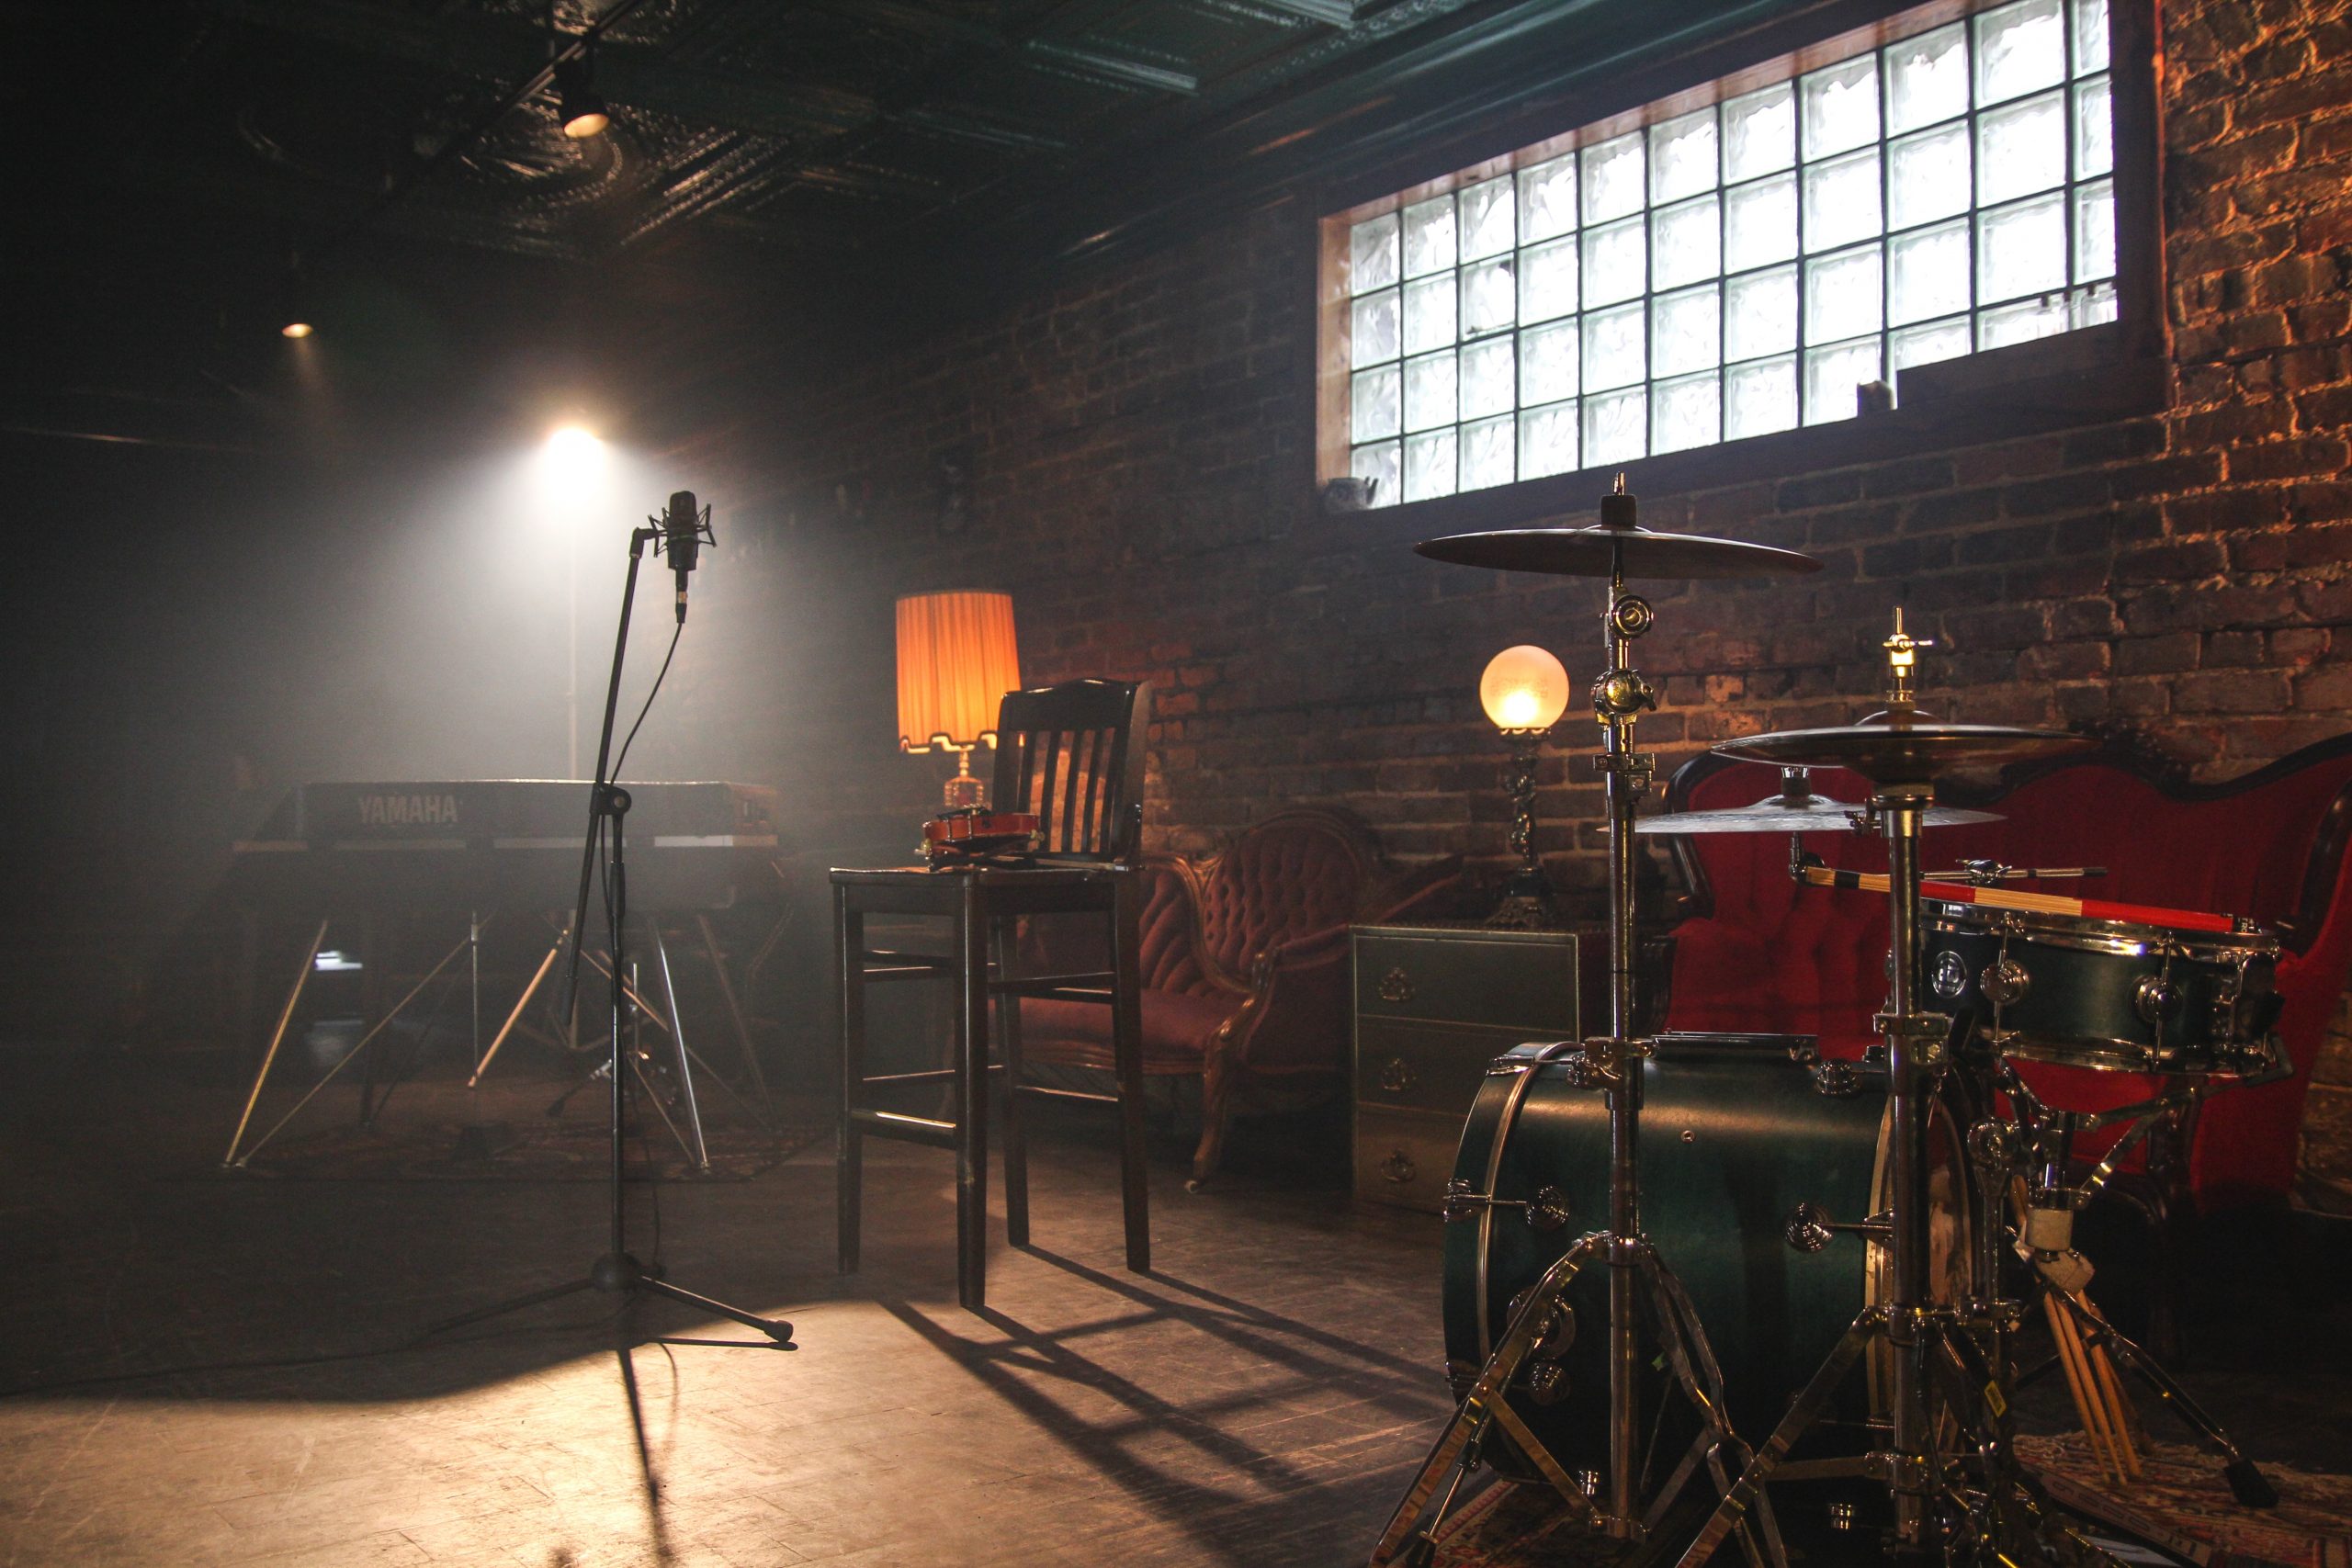 A music studio in low light